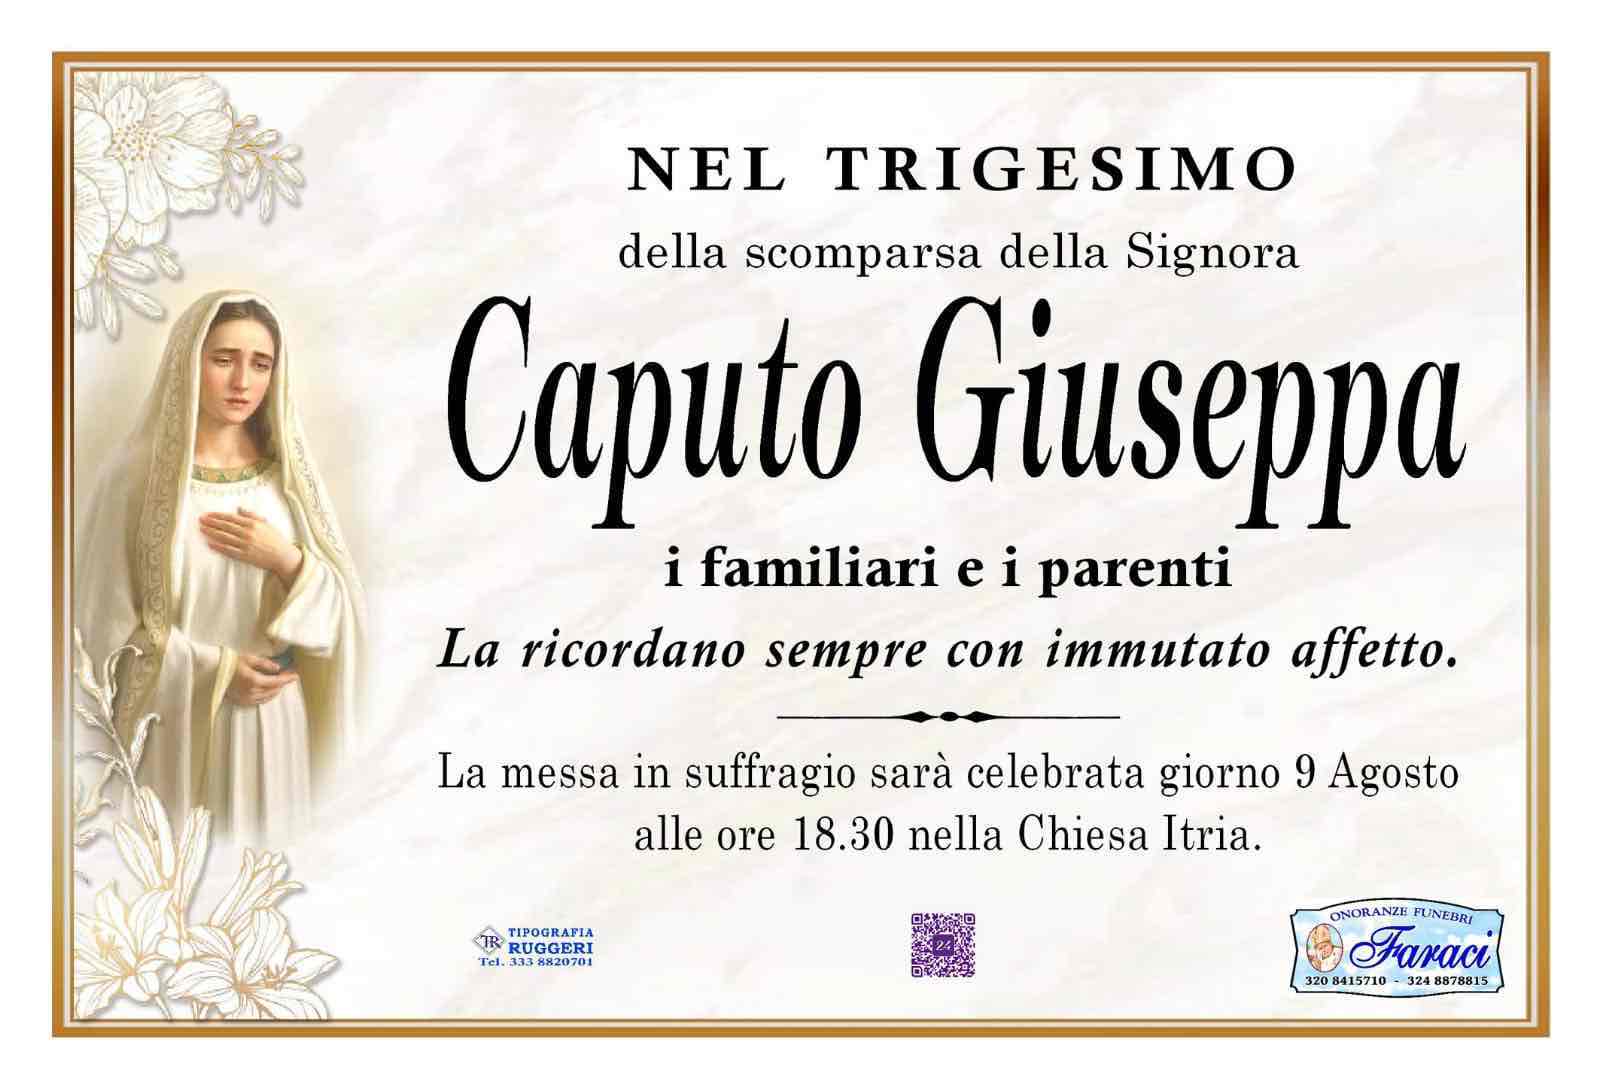 Giuseppa Caputo